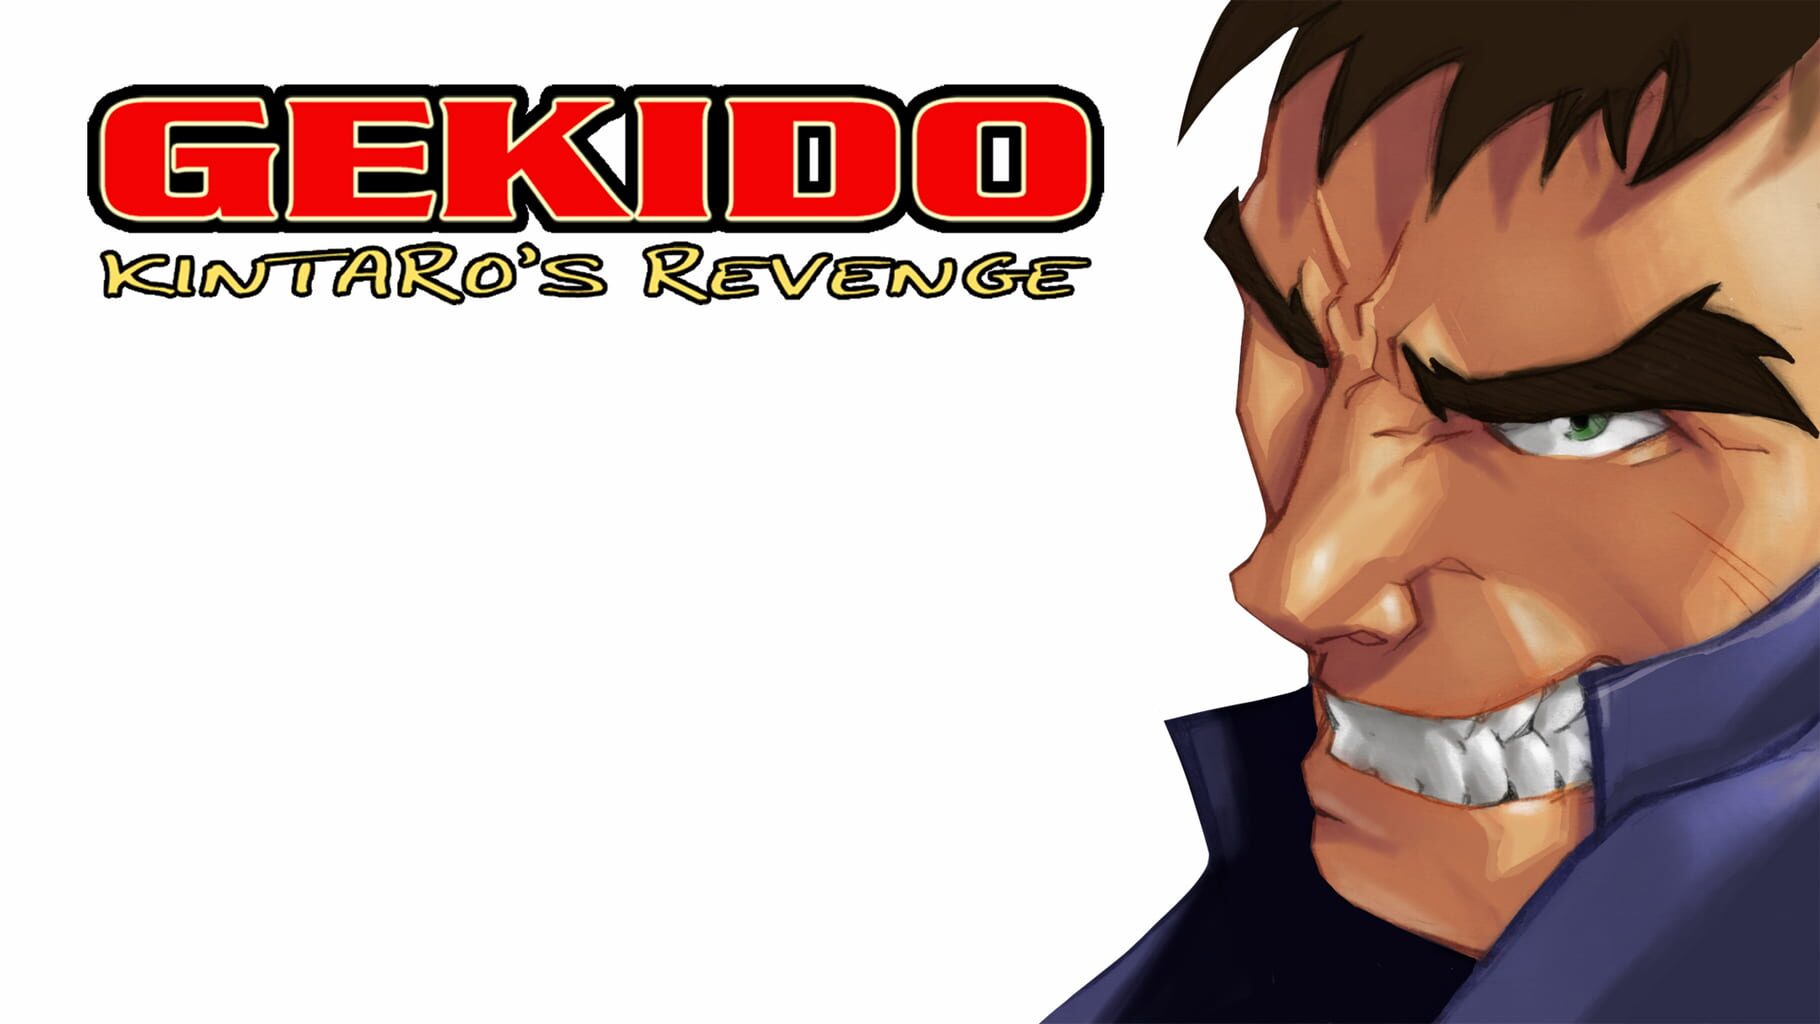 Gekido: Kintaro's Revenge artwork